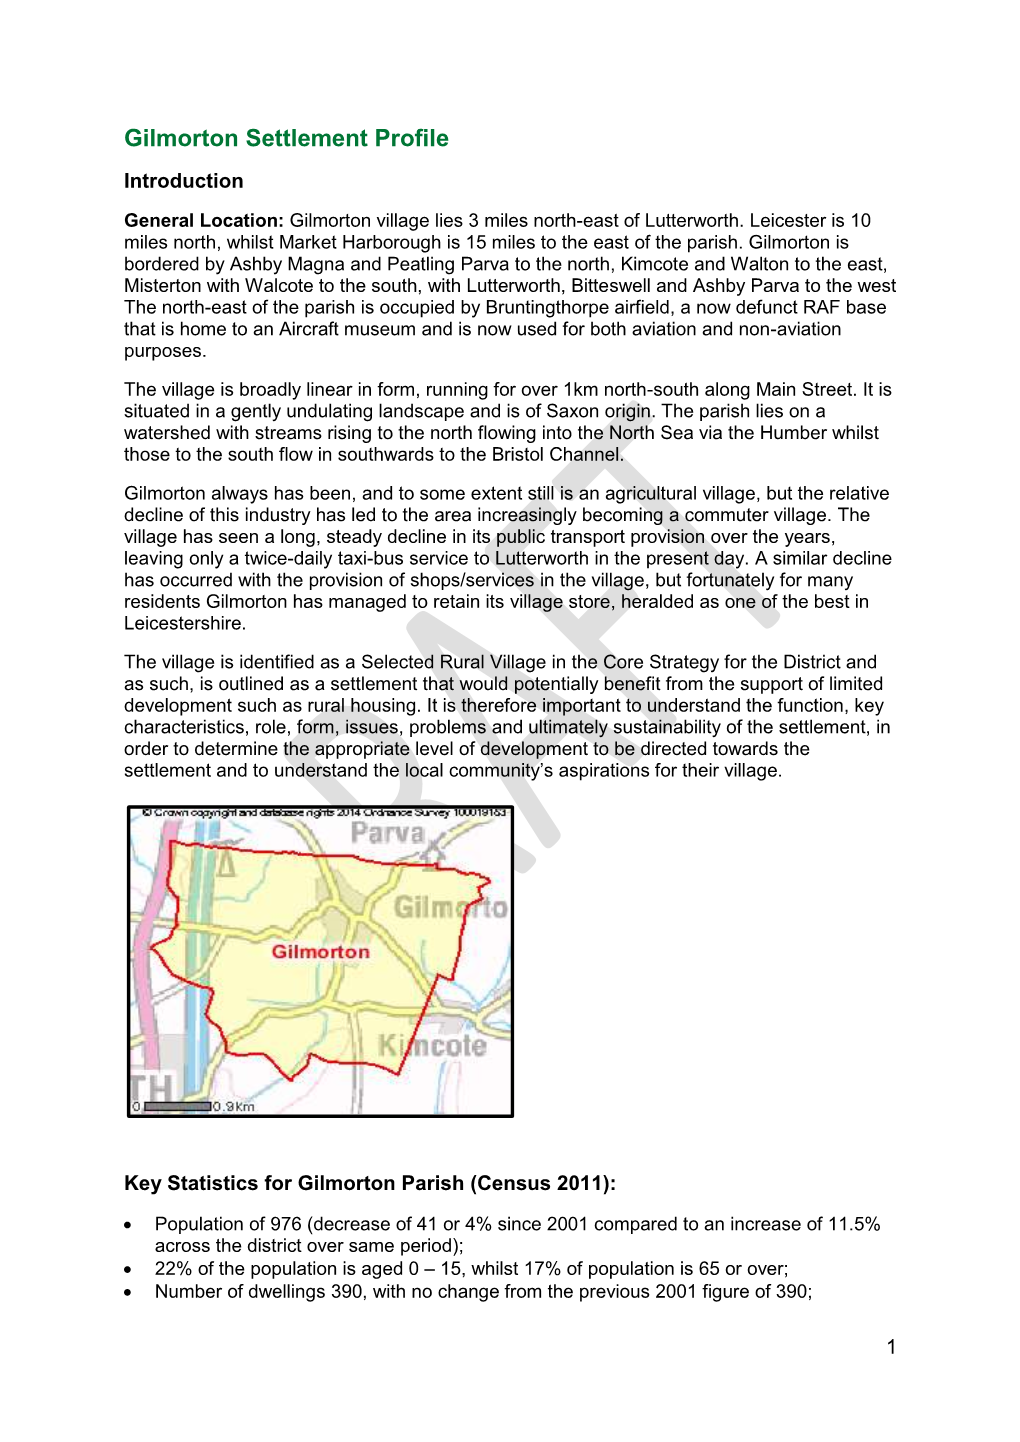 Gilmorton Settlement Profile Introduction